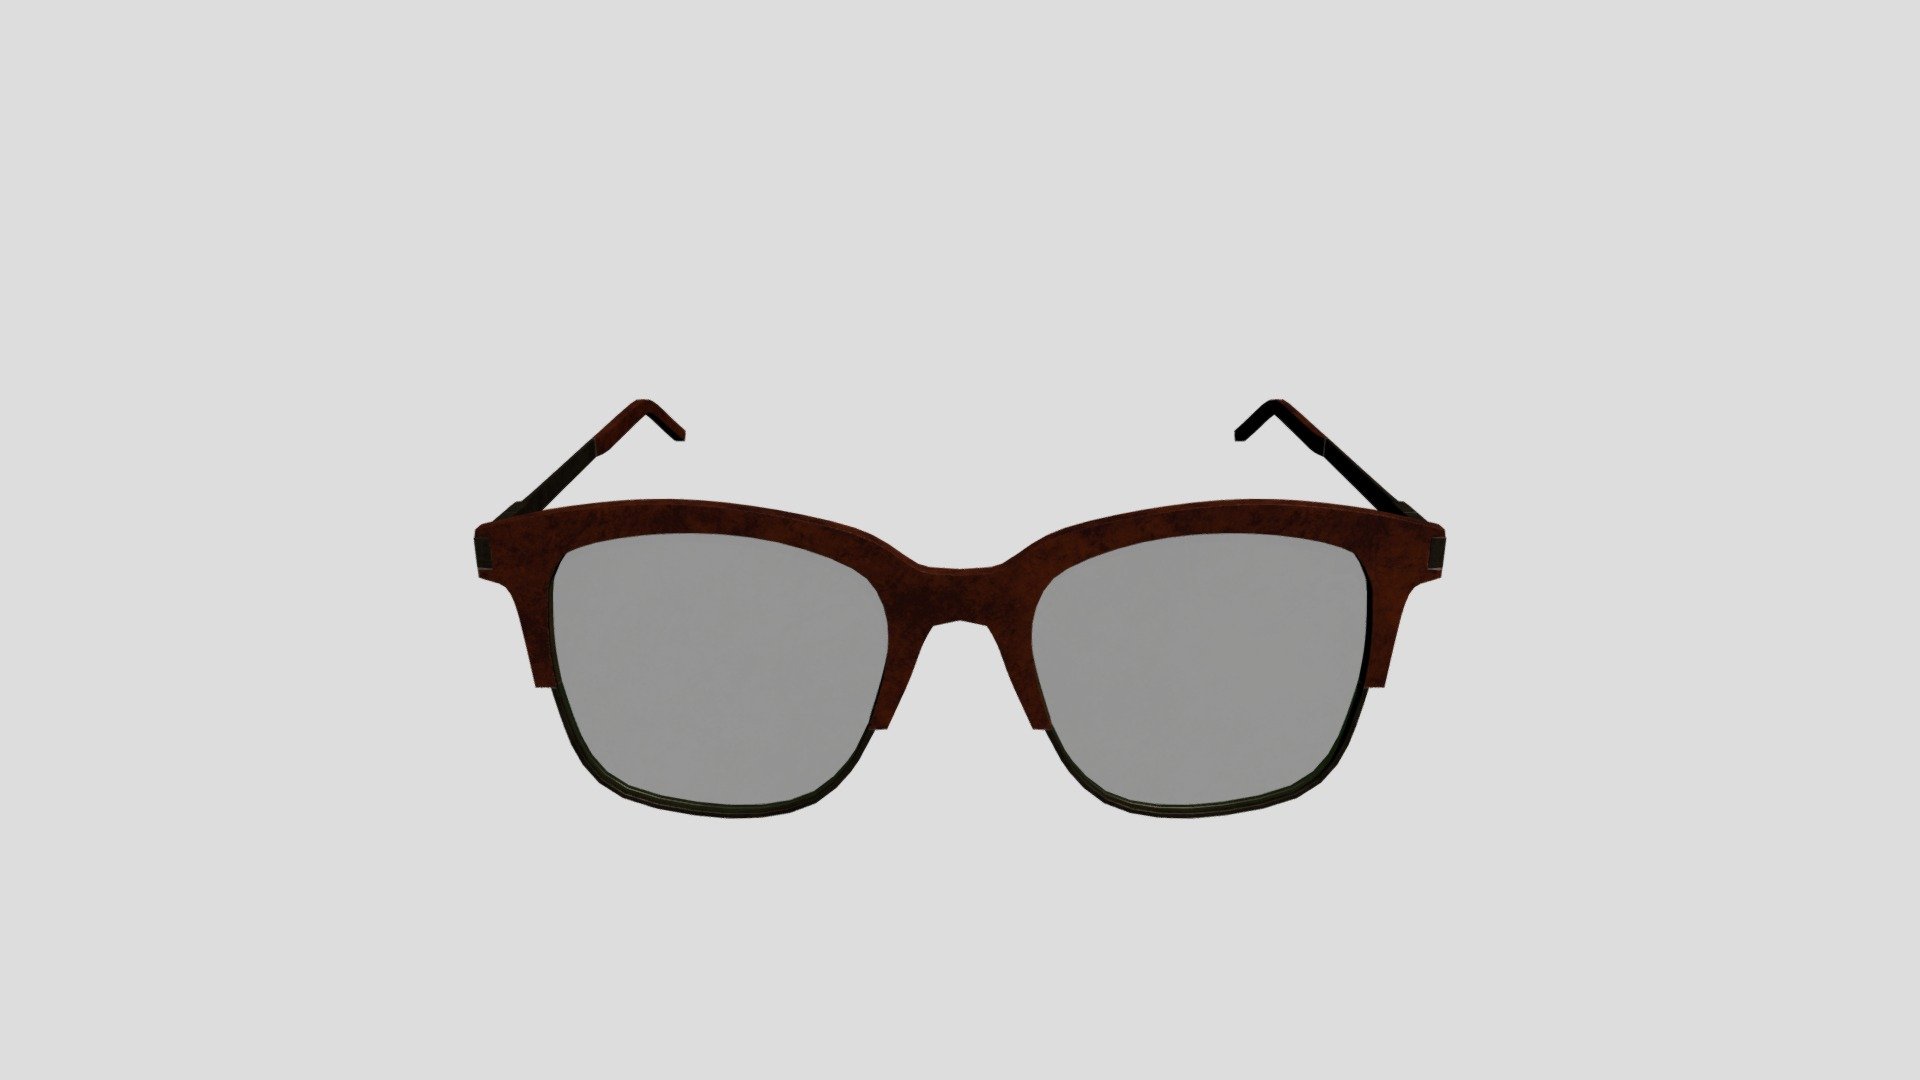 I tried to model Eyeglass - Eyeglass - Download Free 3D model by mralo 3d model